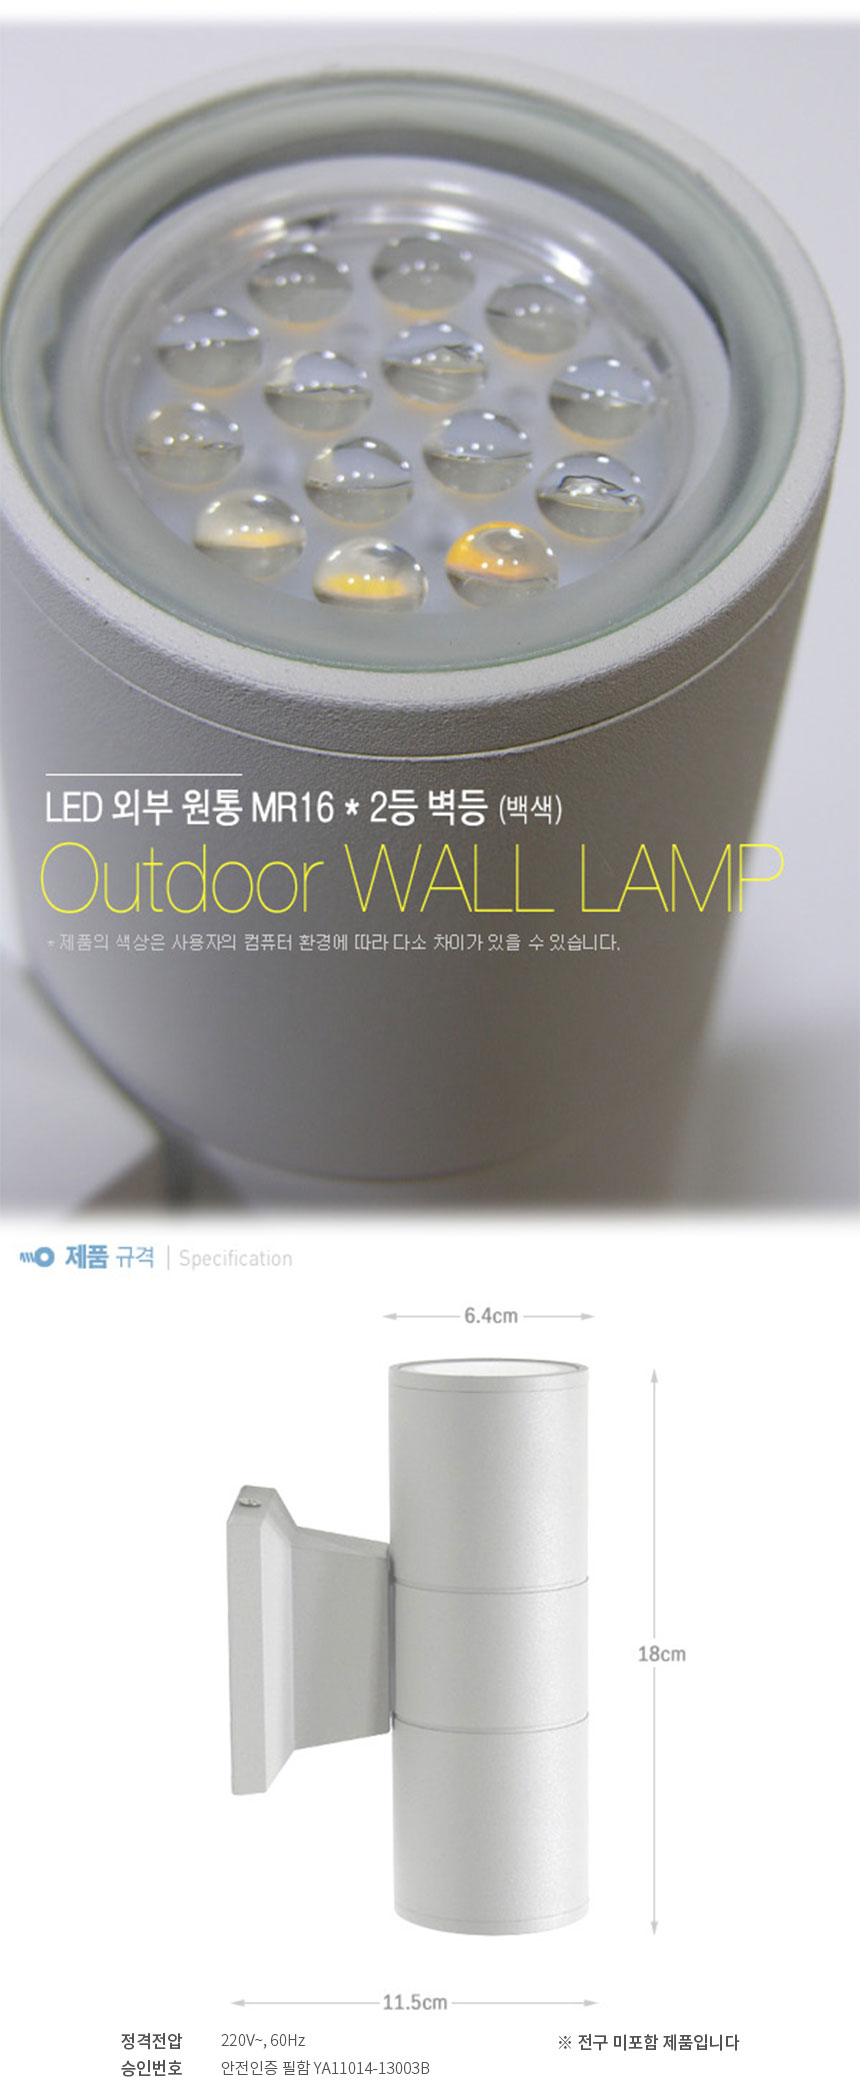 LED 외부 원통 MR16 * 2등 벽등 (백색)
OUtdoor wall lamp
제품의 색상은 사용자의 컴퓨터 환경에 따라 다소 차이가 있을 수 있습니다.
제품규격 W6.4cm * D11.5cm * H18cm
정격전압 220V 60Hz
승인번호 안전인증 필함 YA11014-13003B
전구 미 포함 제품입니다
